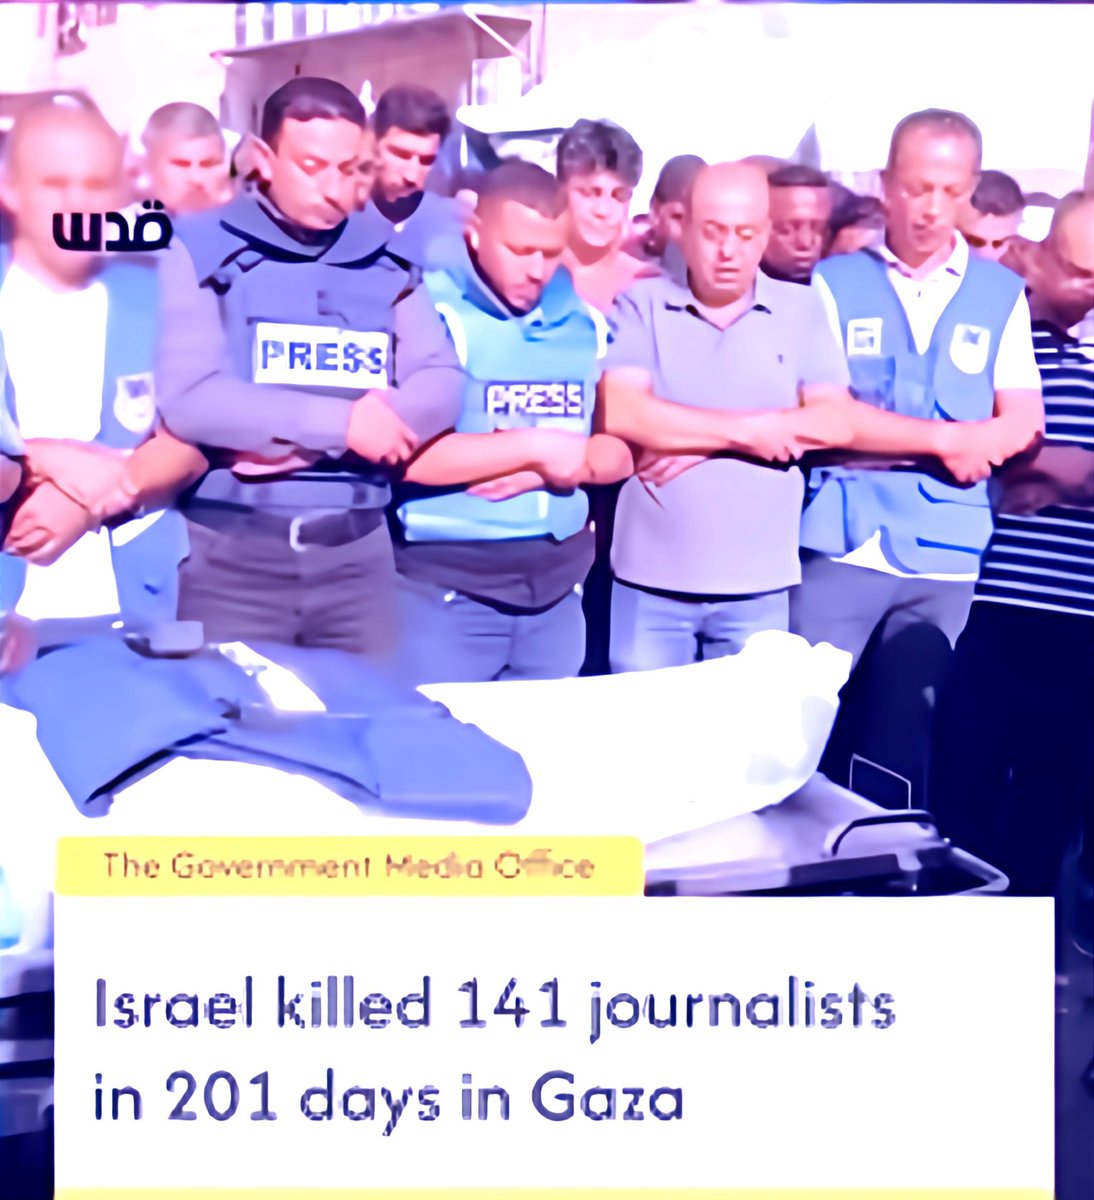 Israel killed 141 Journalist in 201 days in Gaza 💔
#StopGenocideInRafah 
#FreePalestine
#BoycottIsrael
#Stopgenocideingaza